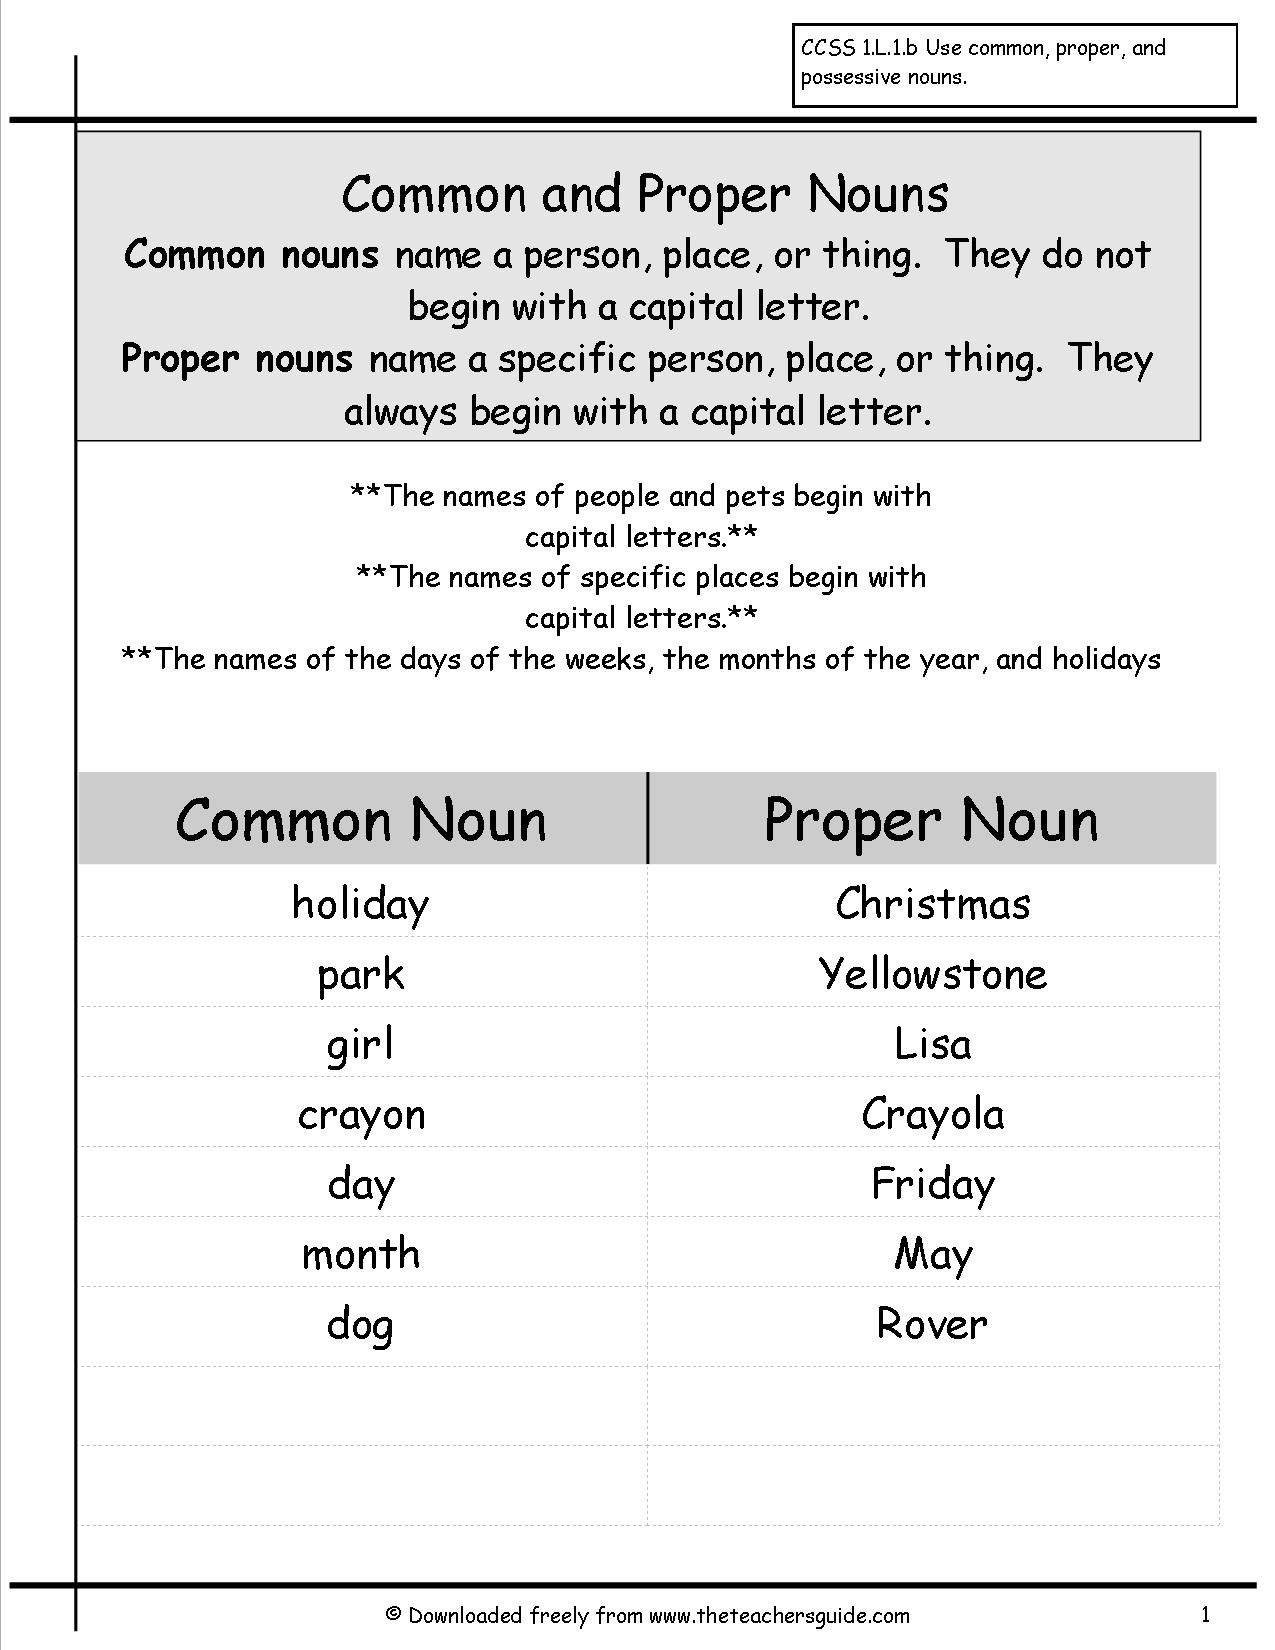 common-and-proper-nouns-nouns-worksheet-nouns-worksheet-proper